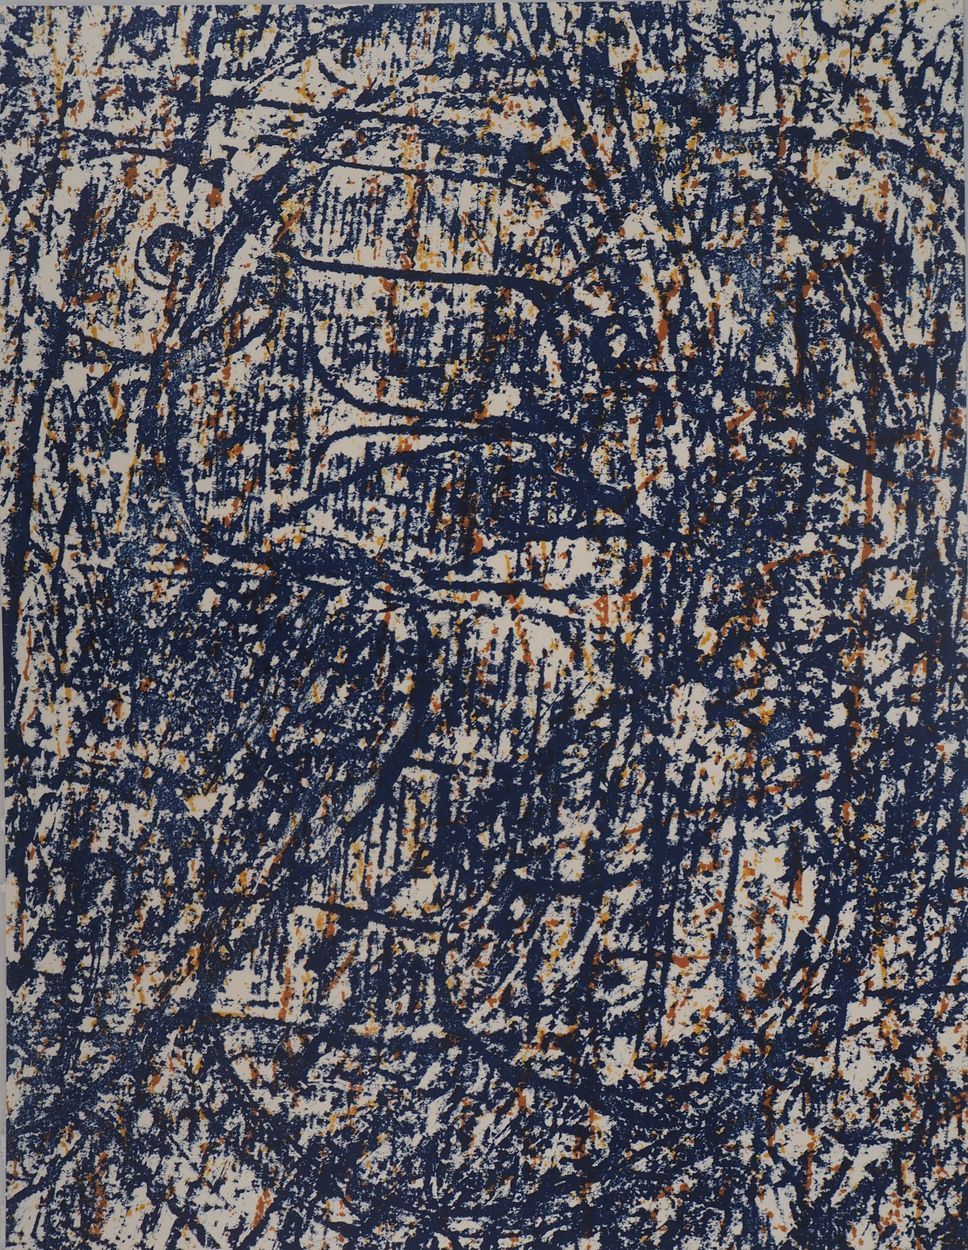 Null 马克斯-安斯特

蓝鸟，1962年

彩色石版画原作（Mourlot工作室）。

无符号

牛皮纸上 31 x 24 厘米

圣拉扎罗版, 1962
&hellip;